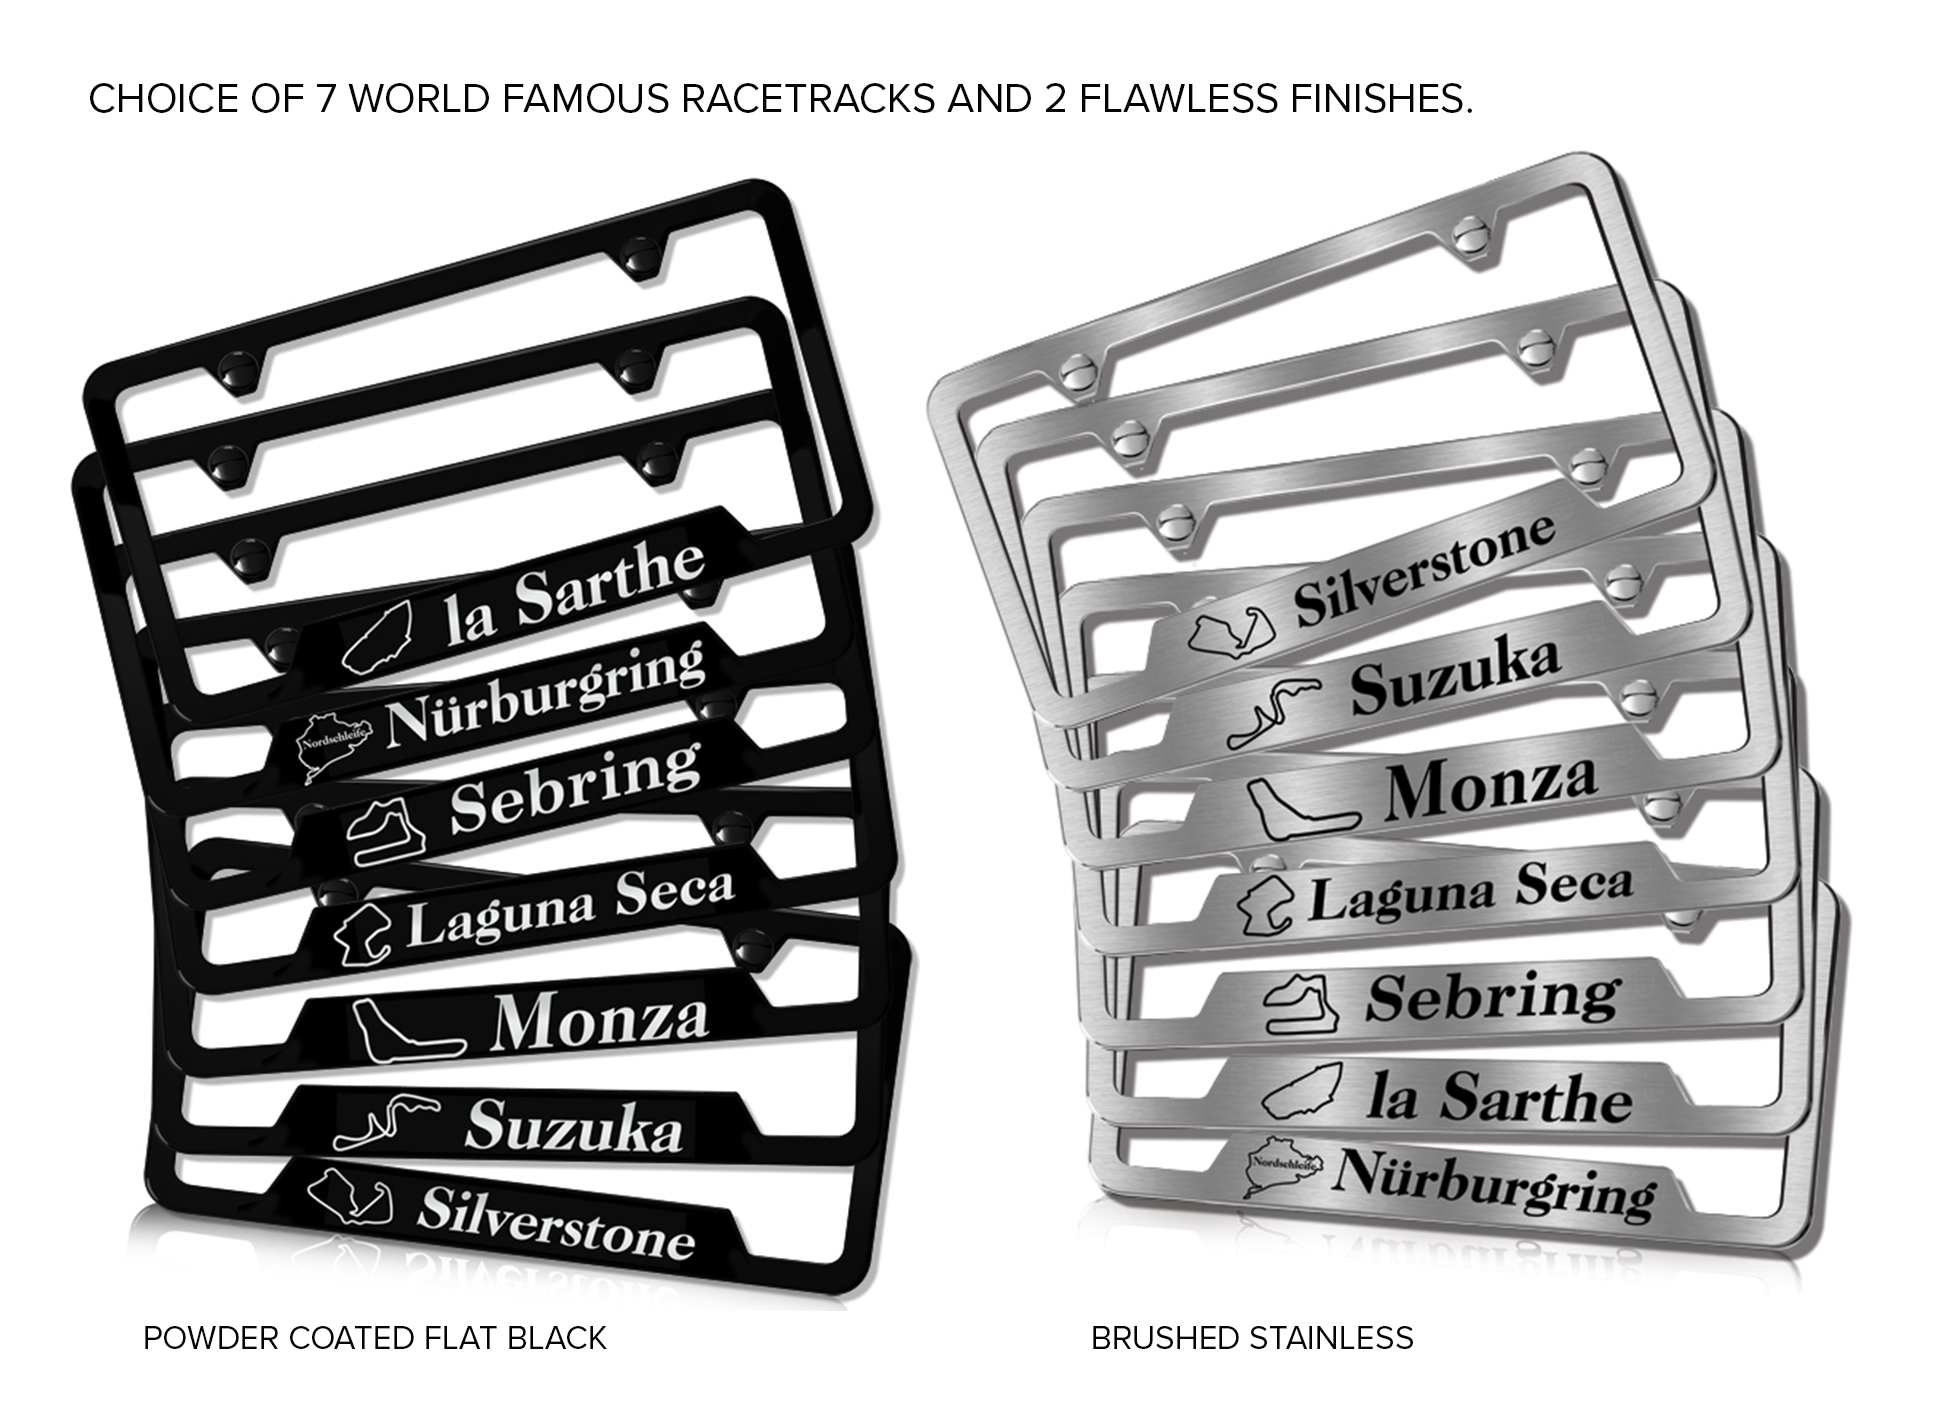 FSPORT BLACK Powder Coated Metal License Plate Frame Tag Holder w/Screw caps